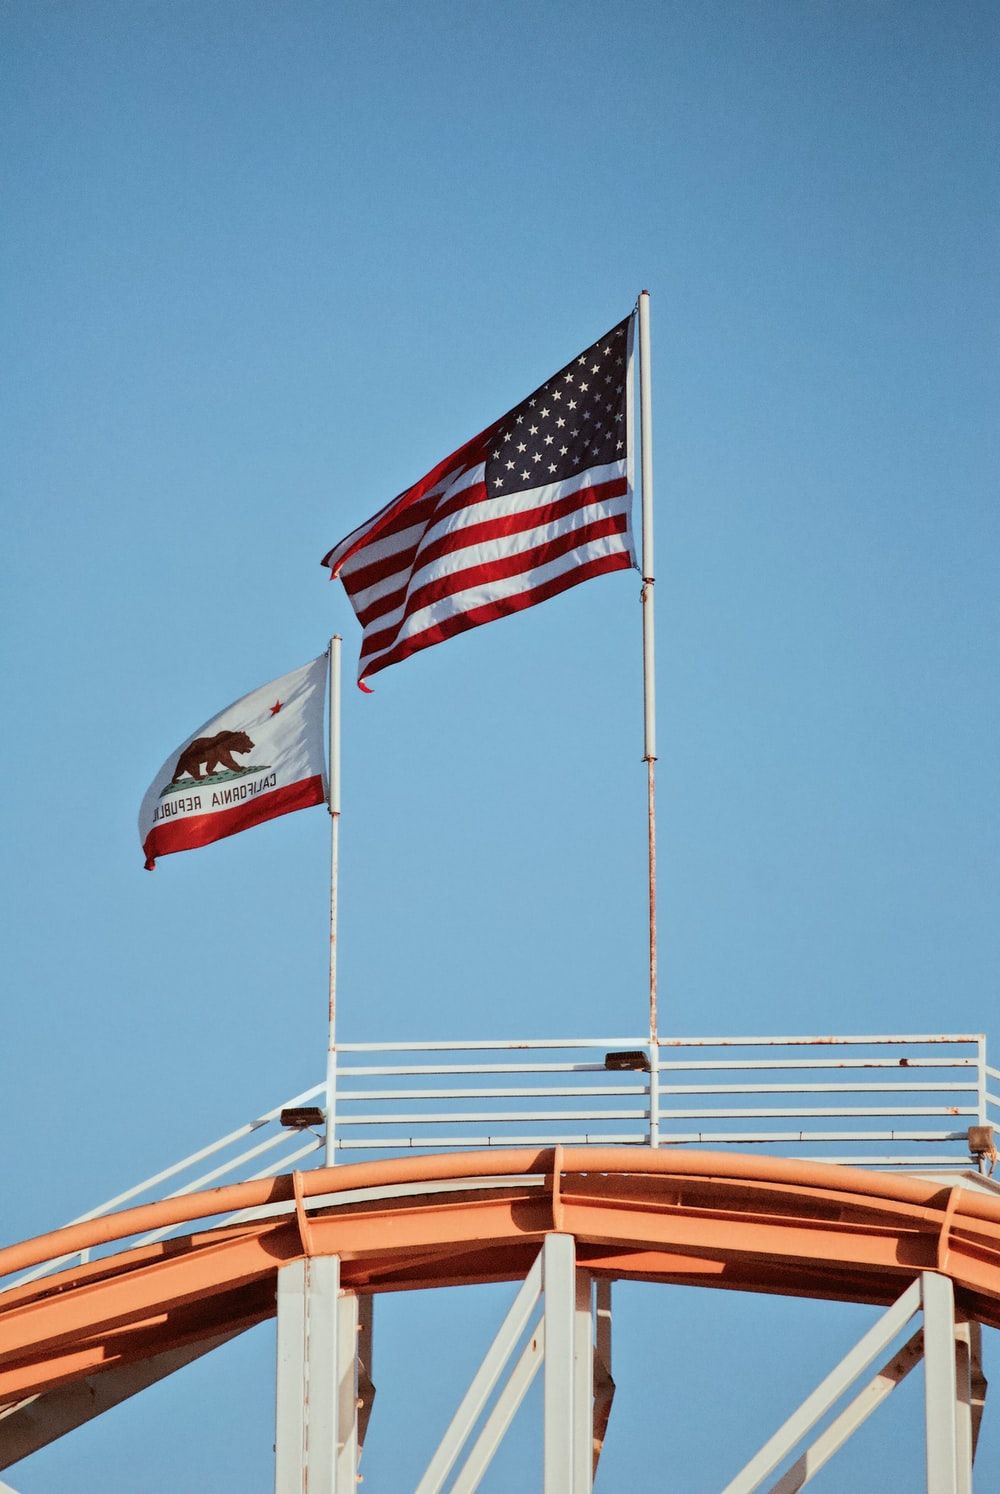 US flag and California flag on poles photo